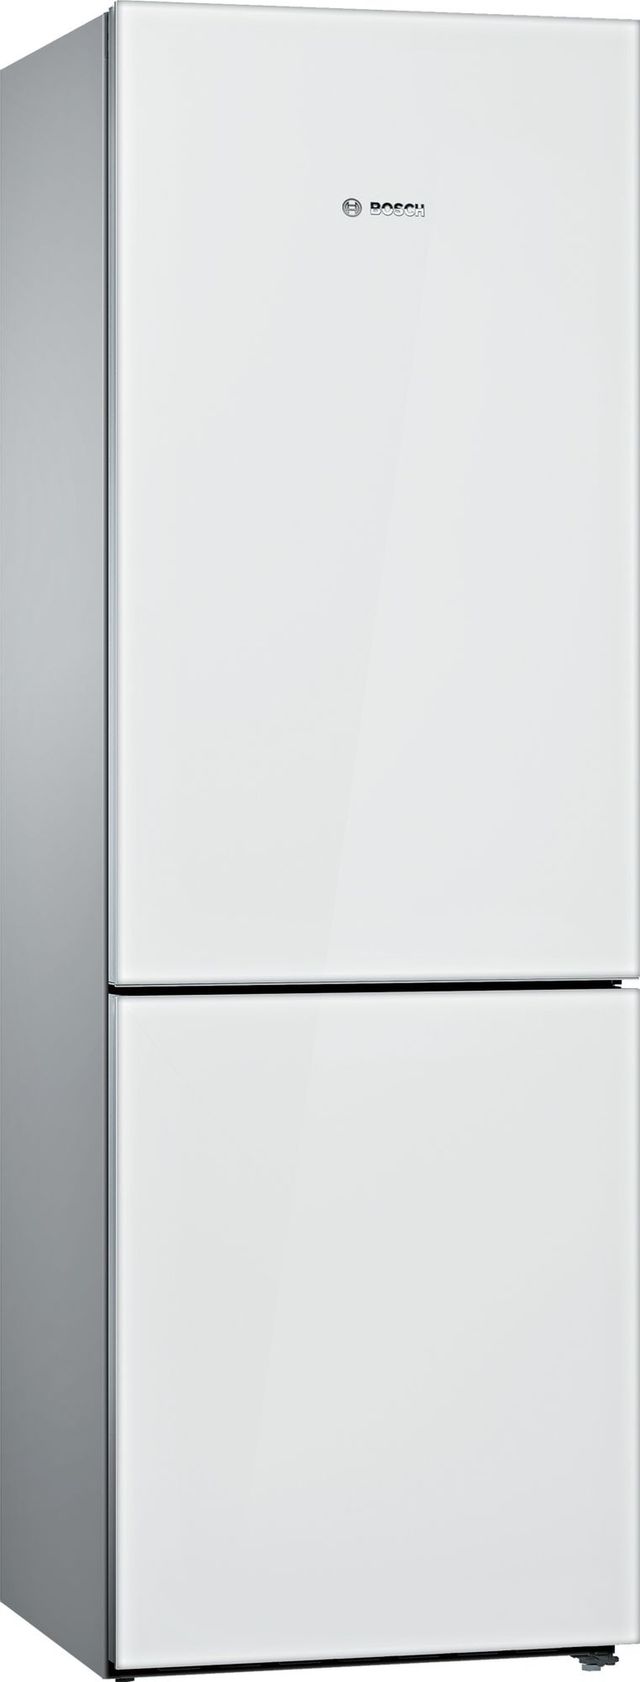 Bosch® 800 Series 10.0 Cu. Ft. White Counter Depth Bottom Freezer Refrigerator 6